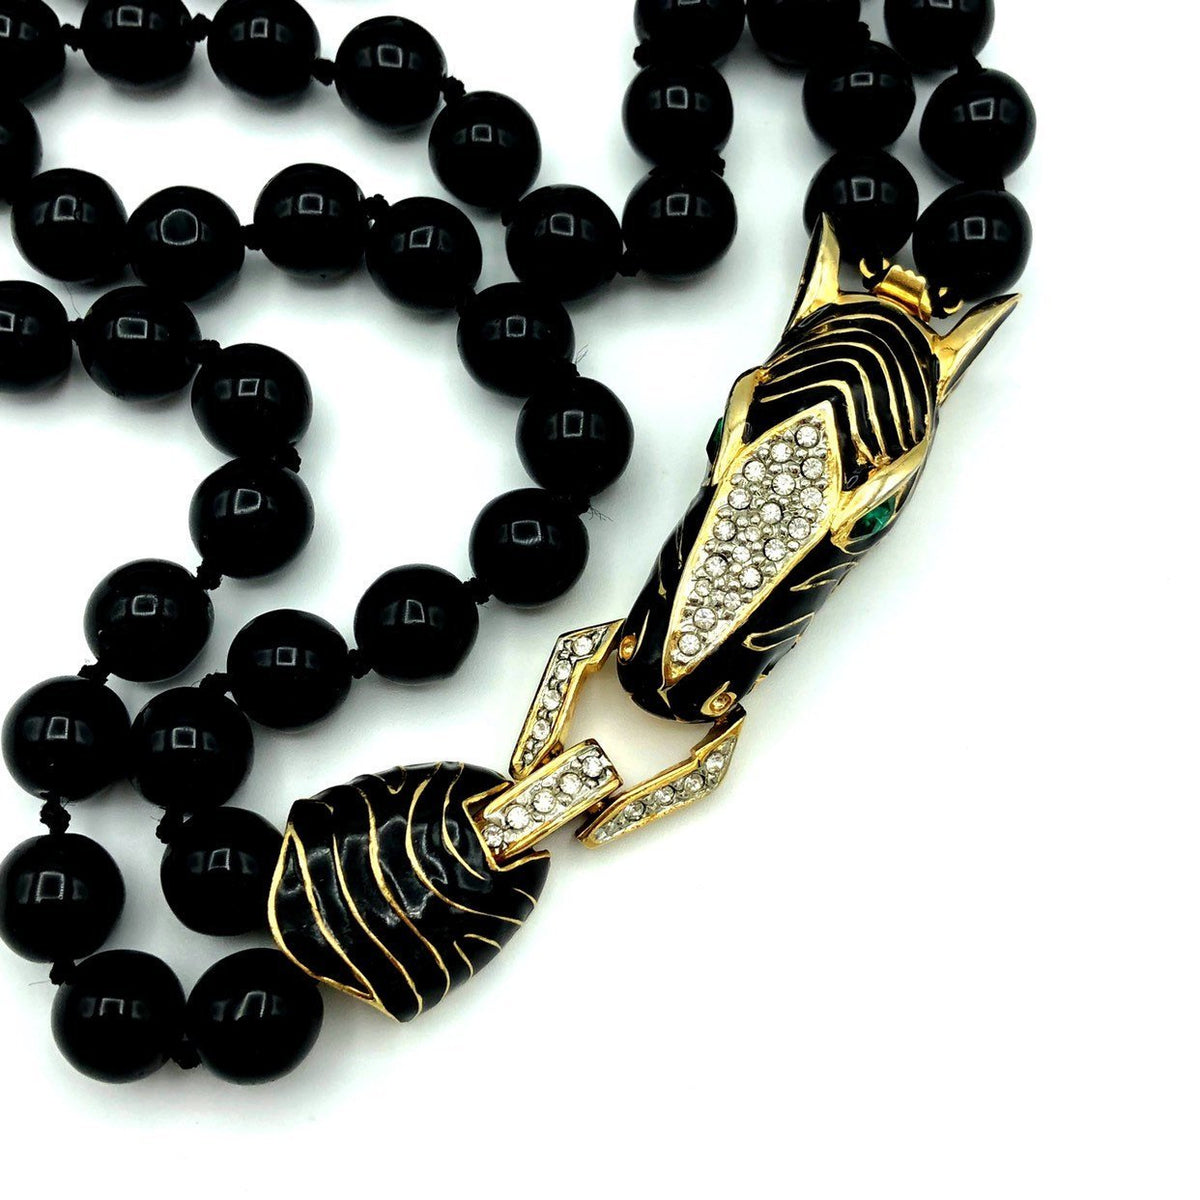 Les Bernard Black Bead Enamel Zebra Necklace - 24 Wishes Vintage Jewelry